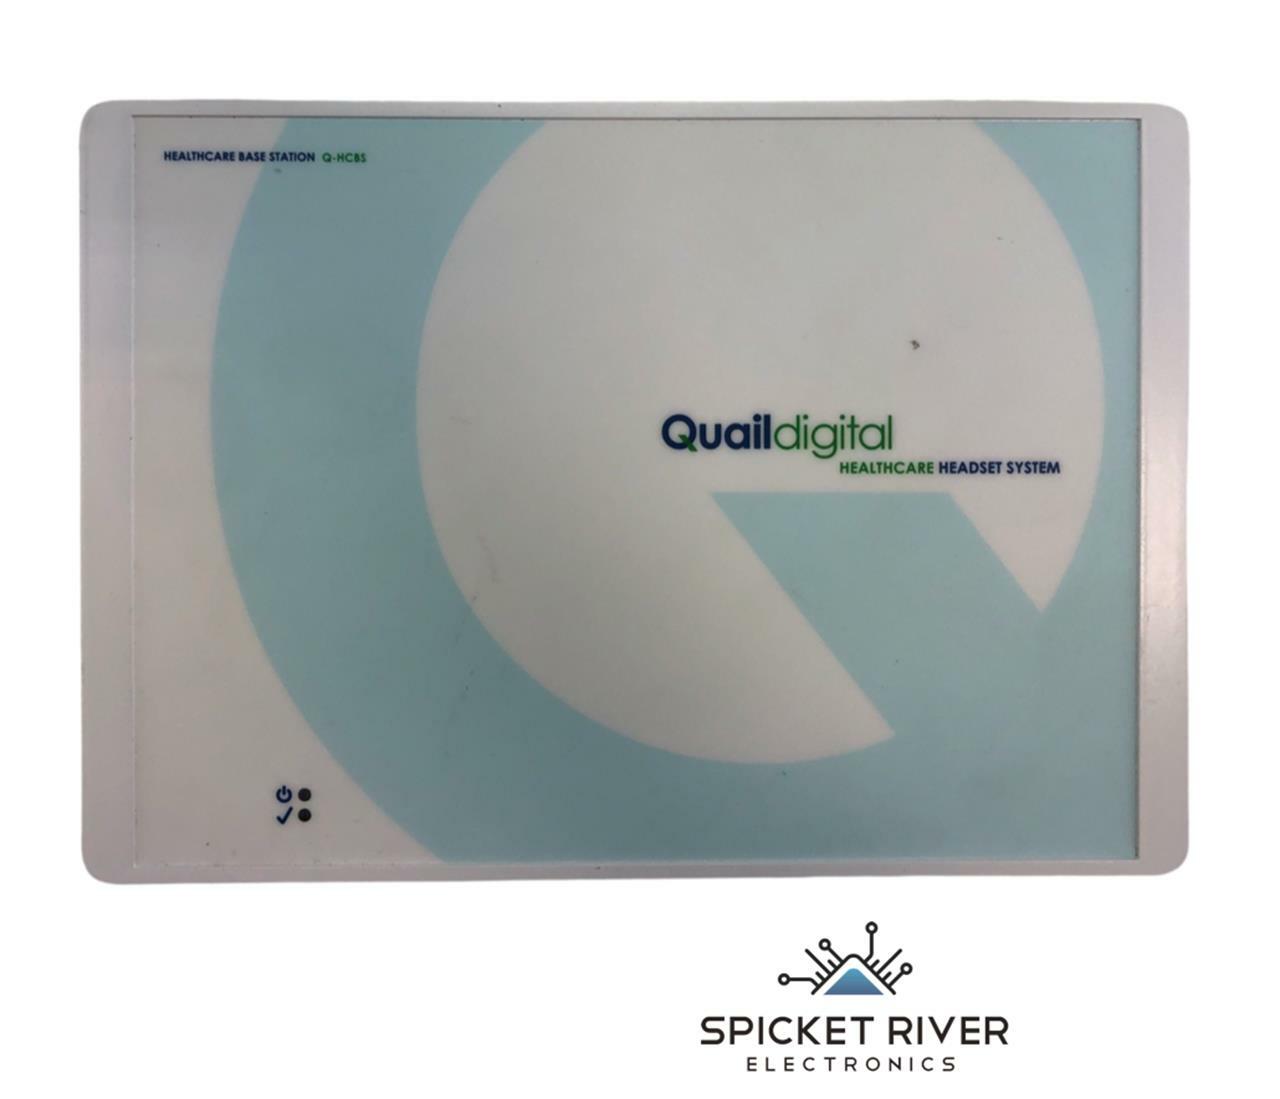 Quail Digital Q-HCBS Healthcare Headset System Base Station